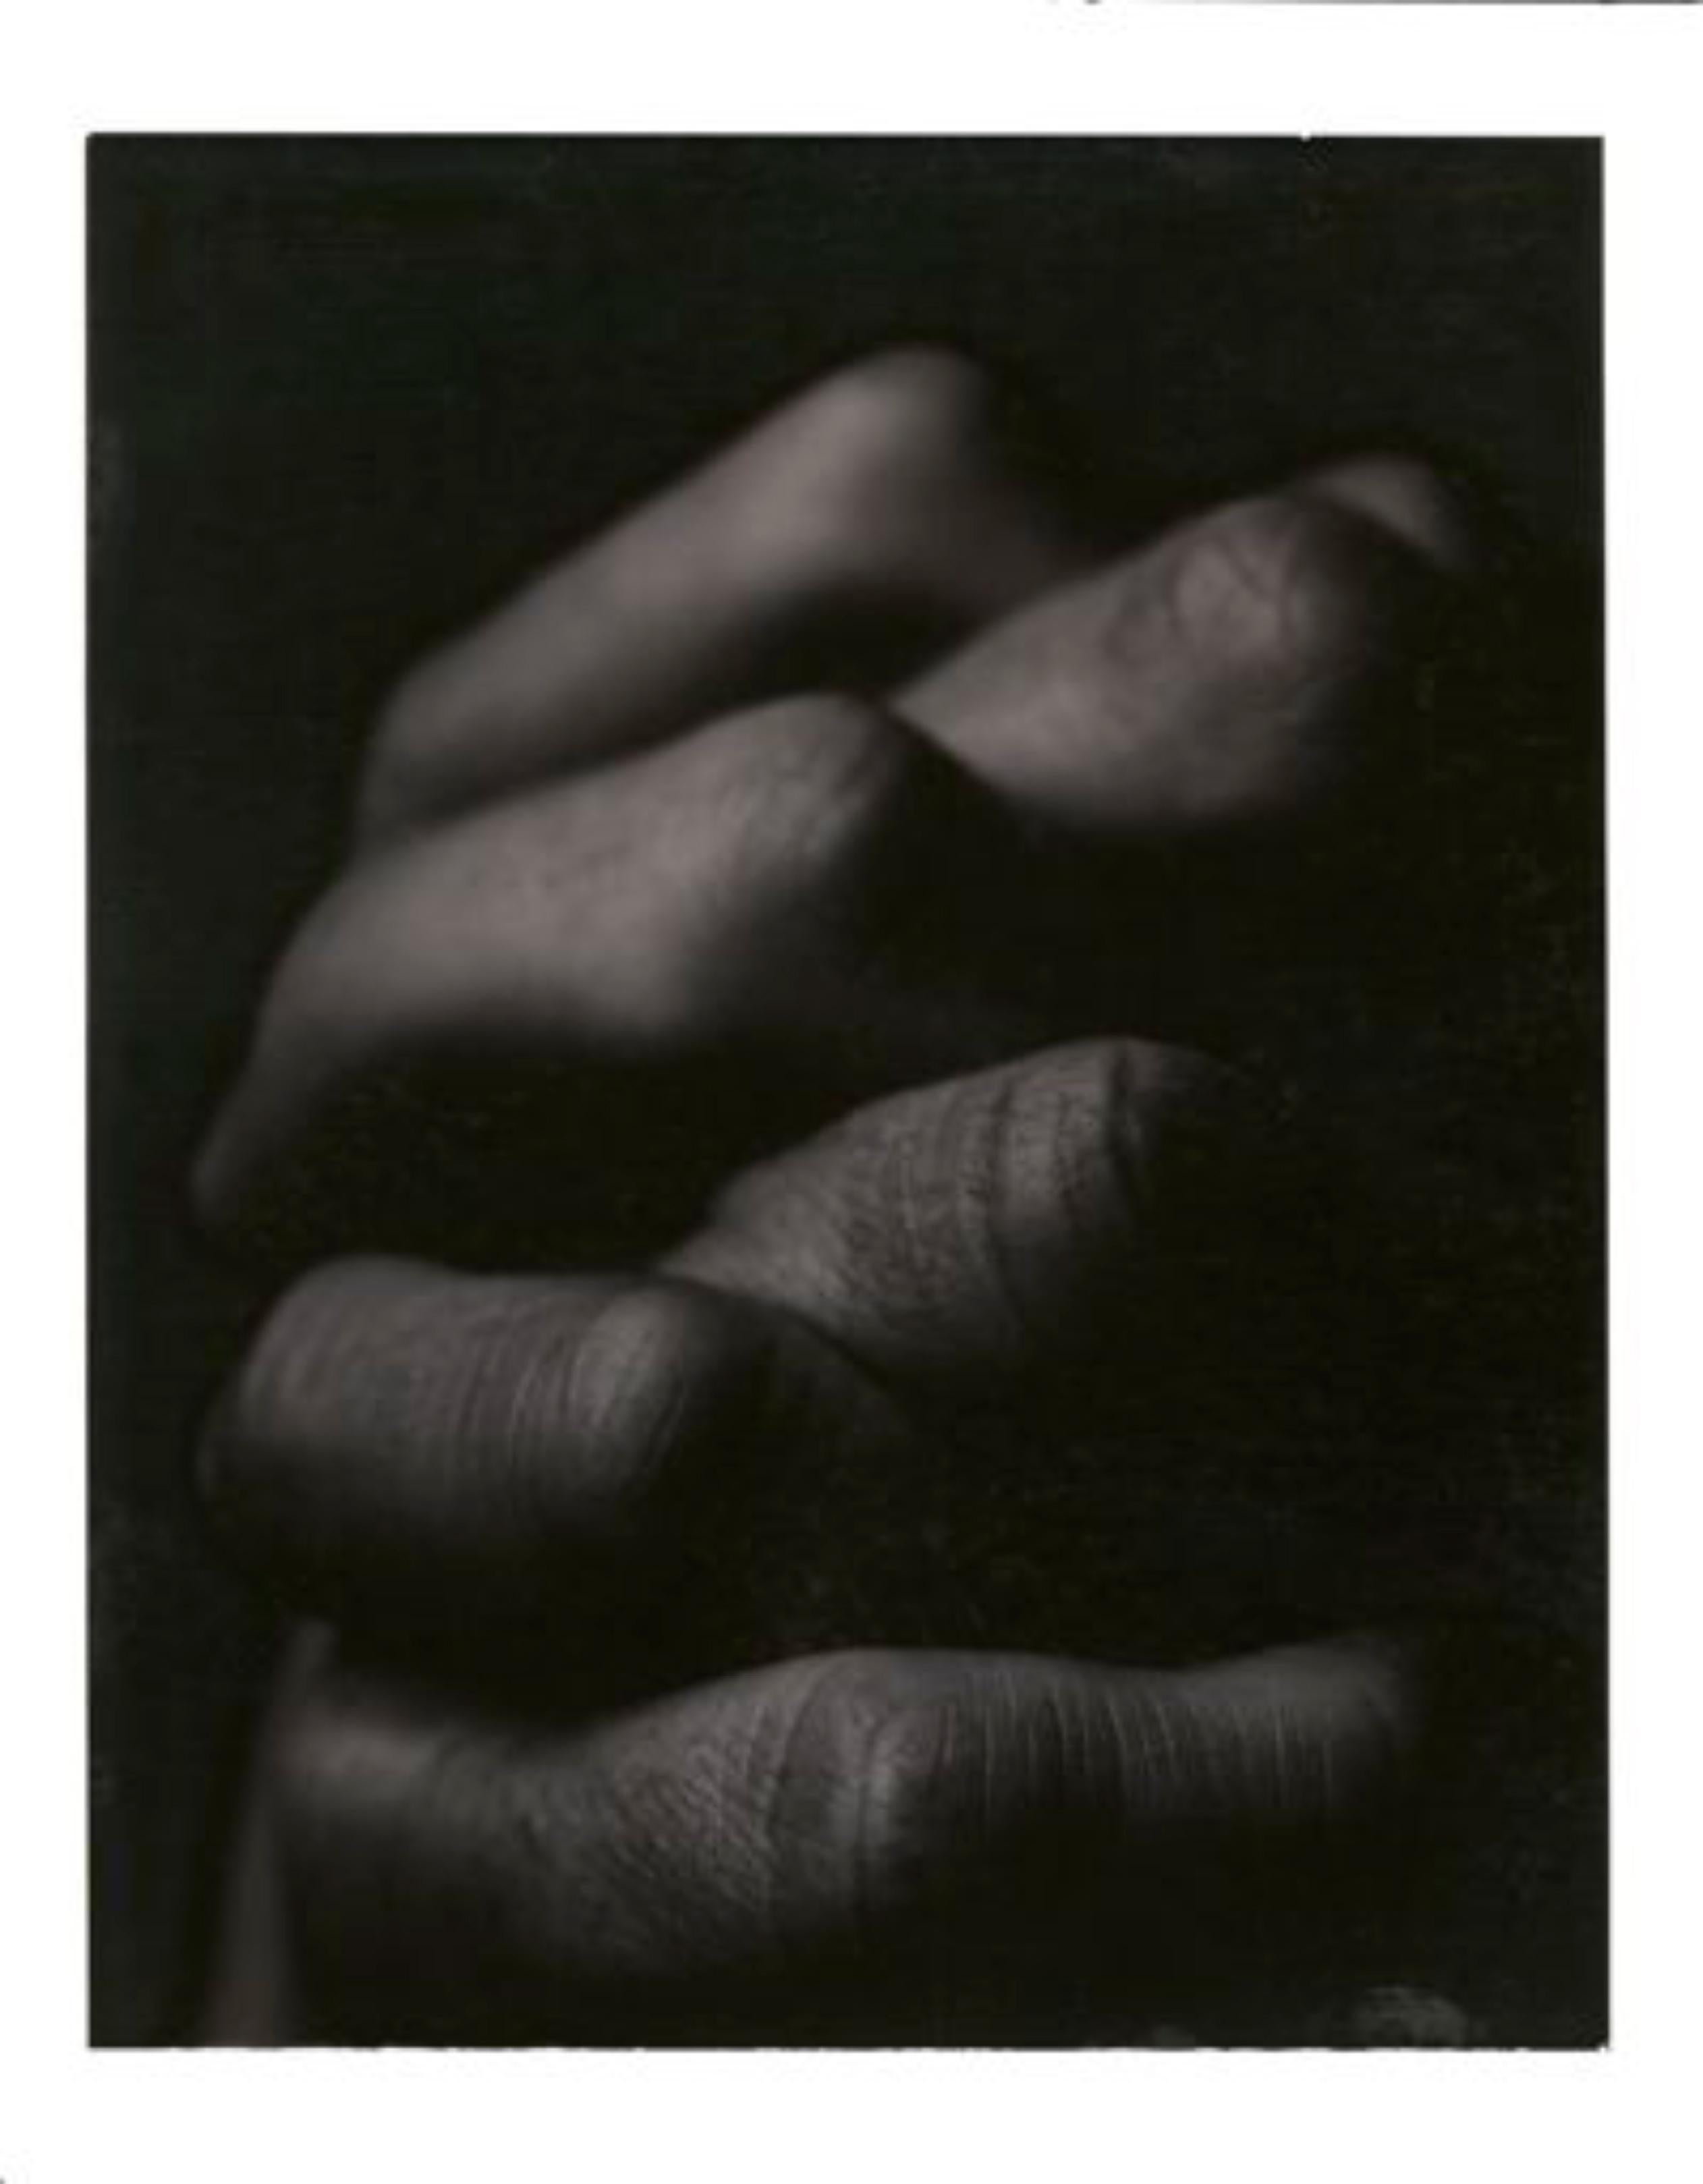 Jose Picayo Abstract Photograph - "Fingers" New York, NY, 1996